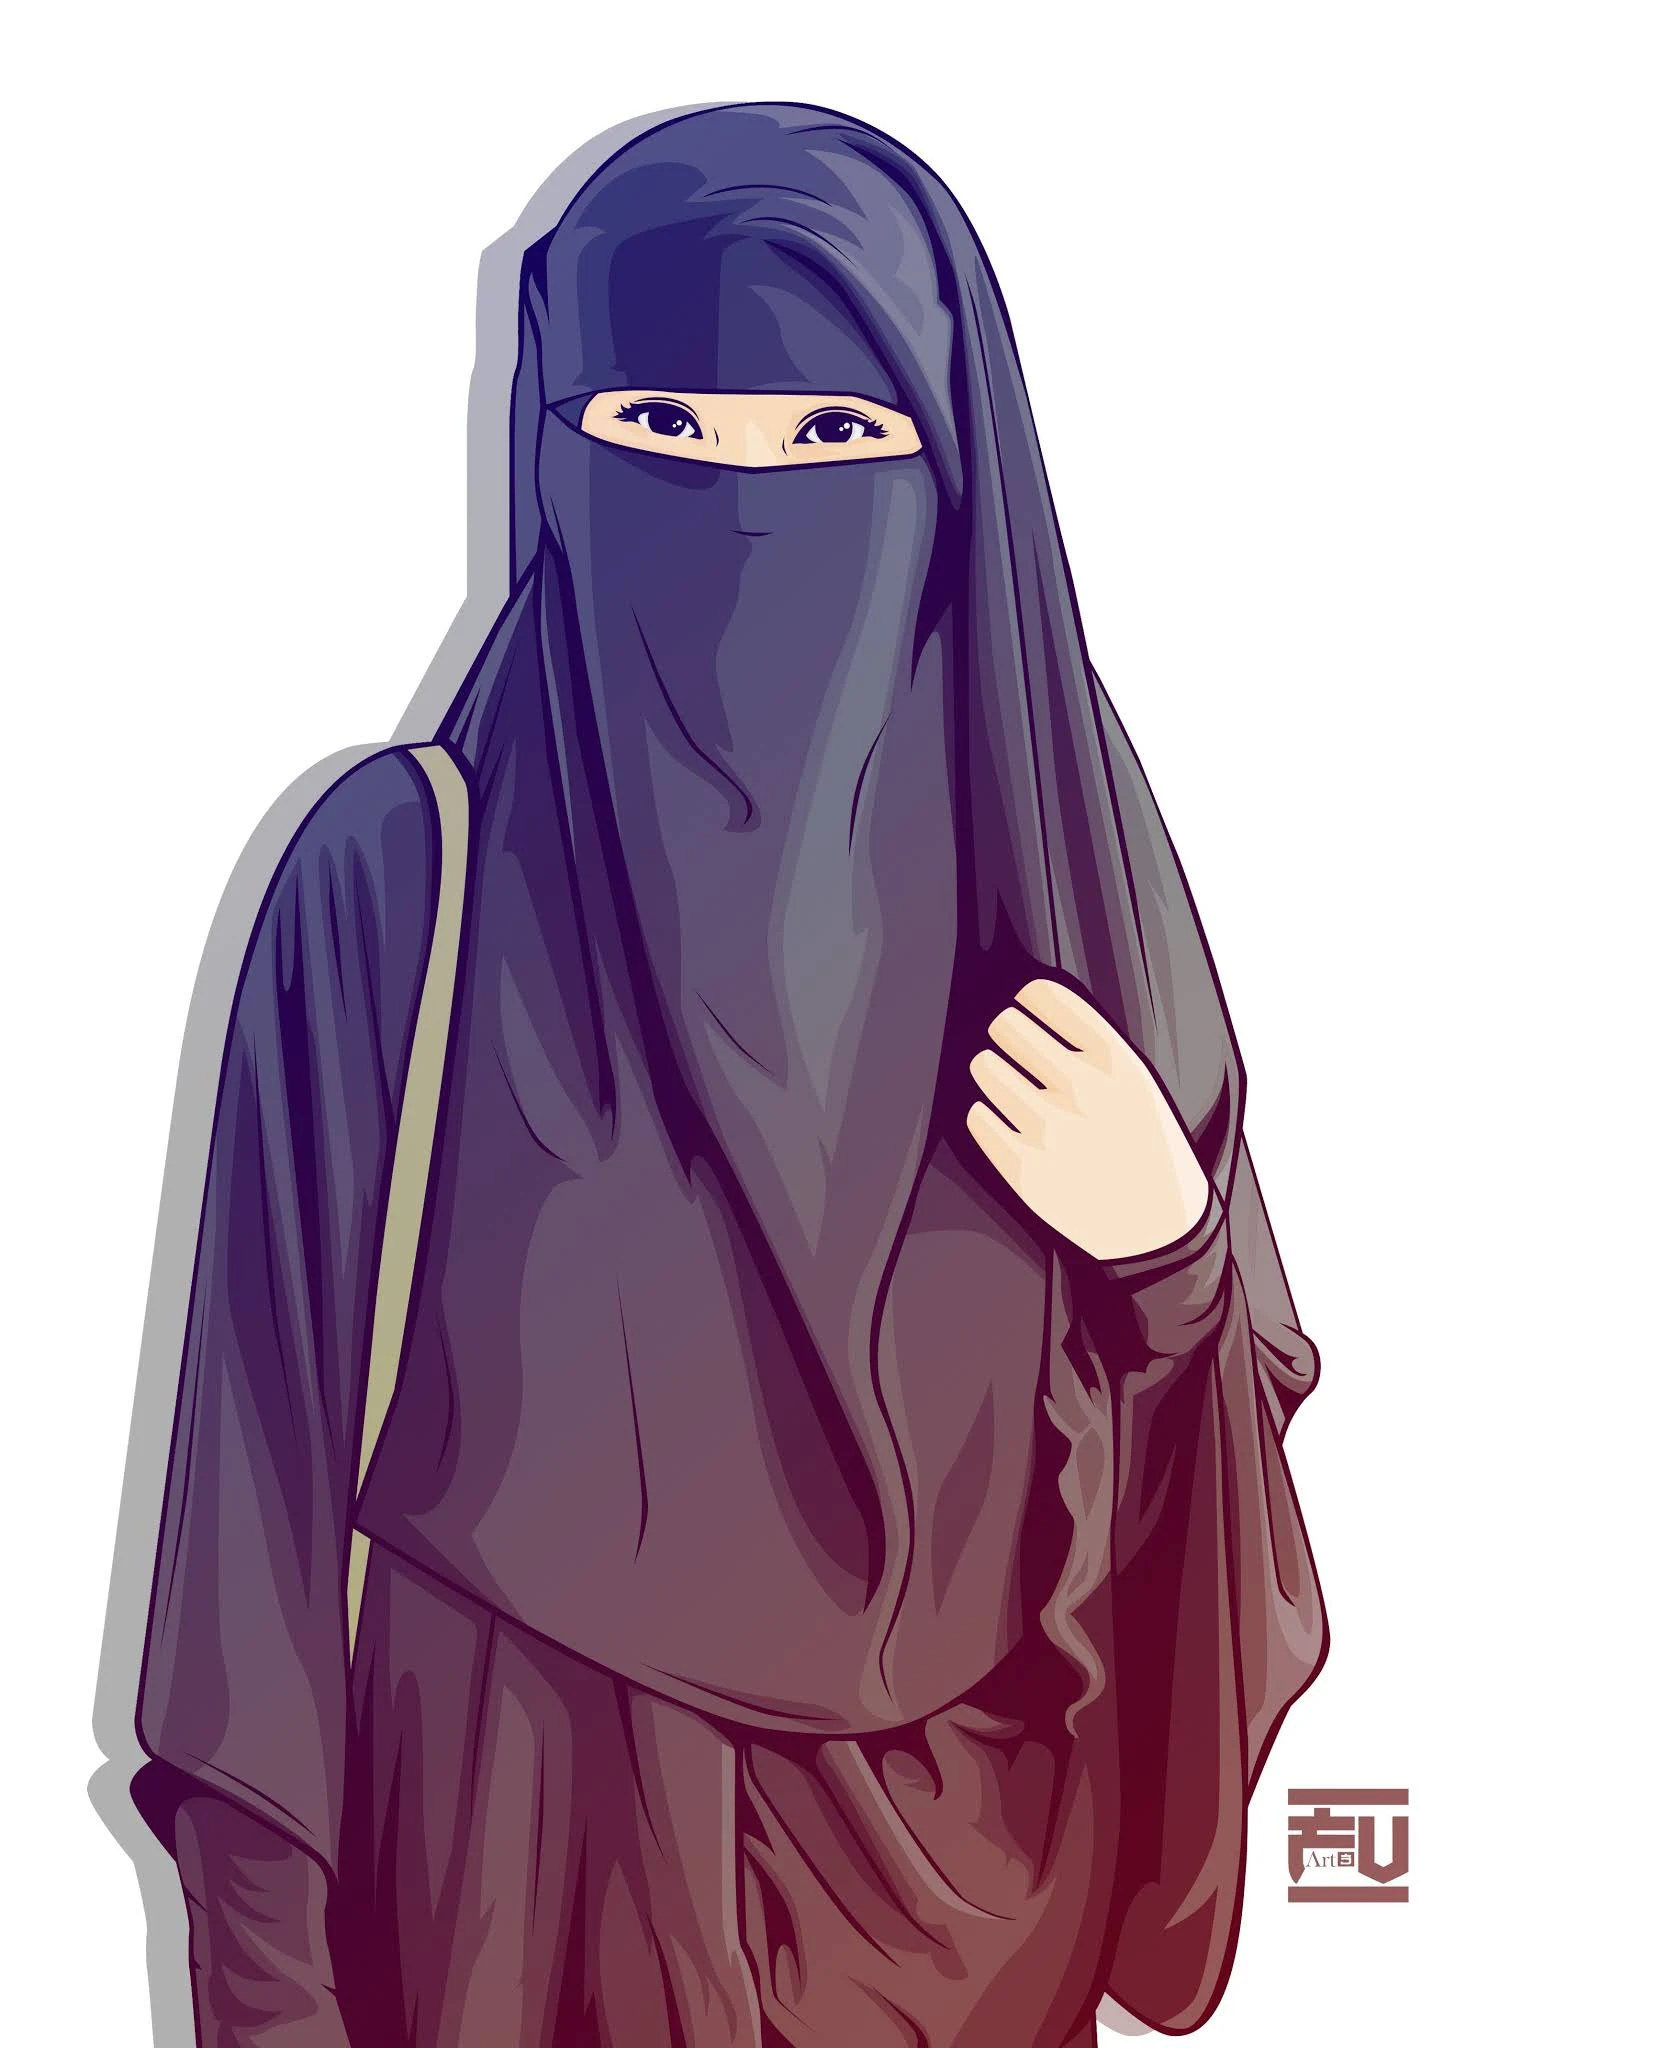 16 Gambar Kartun Hijab Pinterest, Cocok Untuk Cover Wattpad